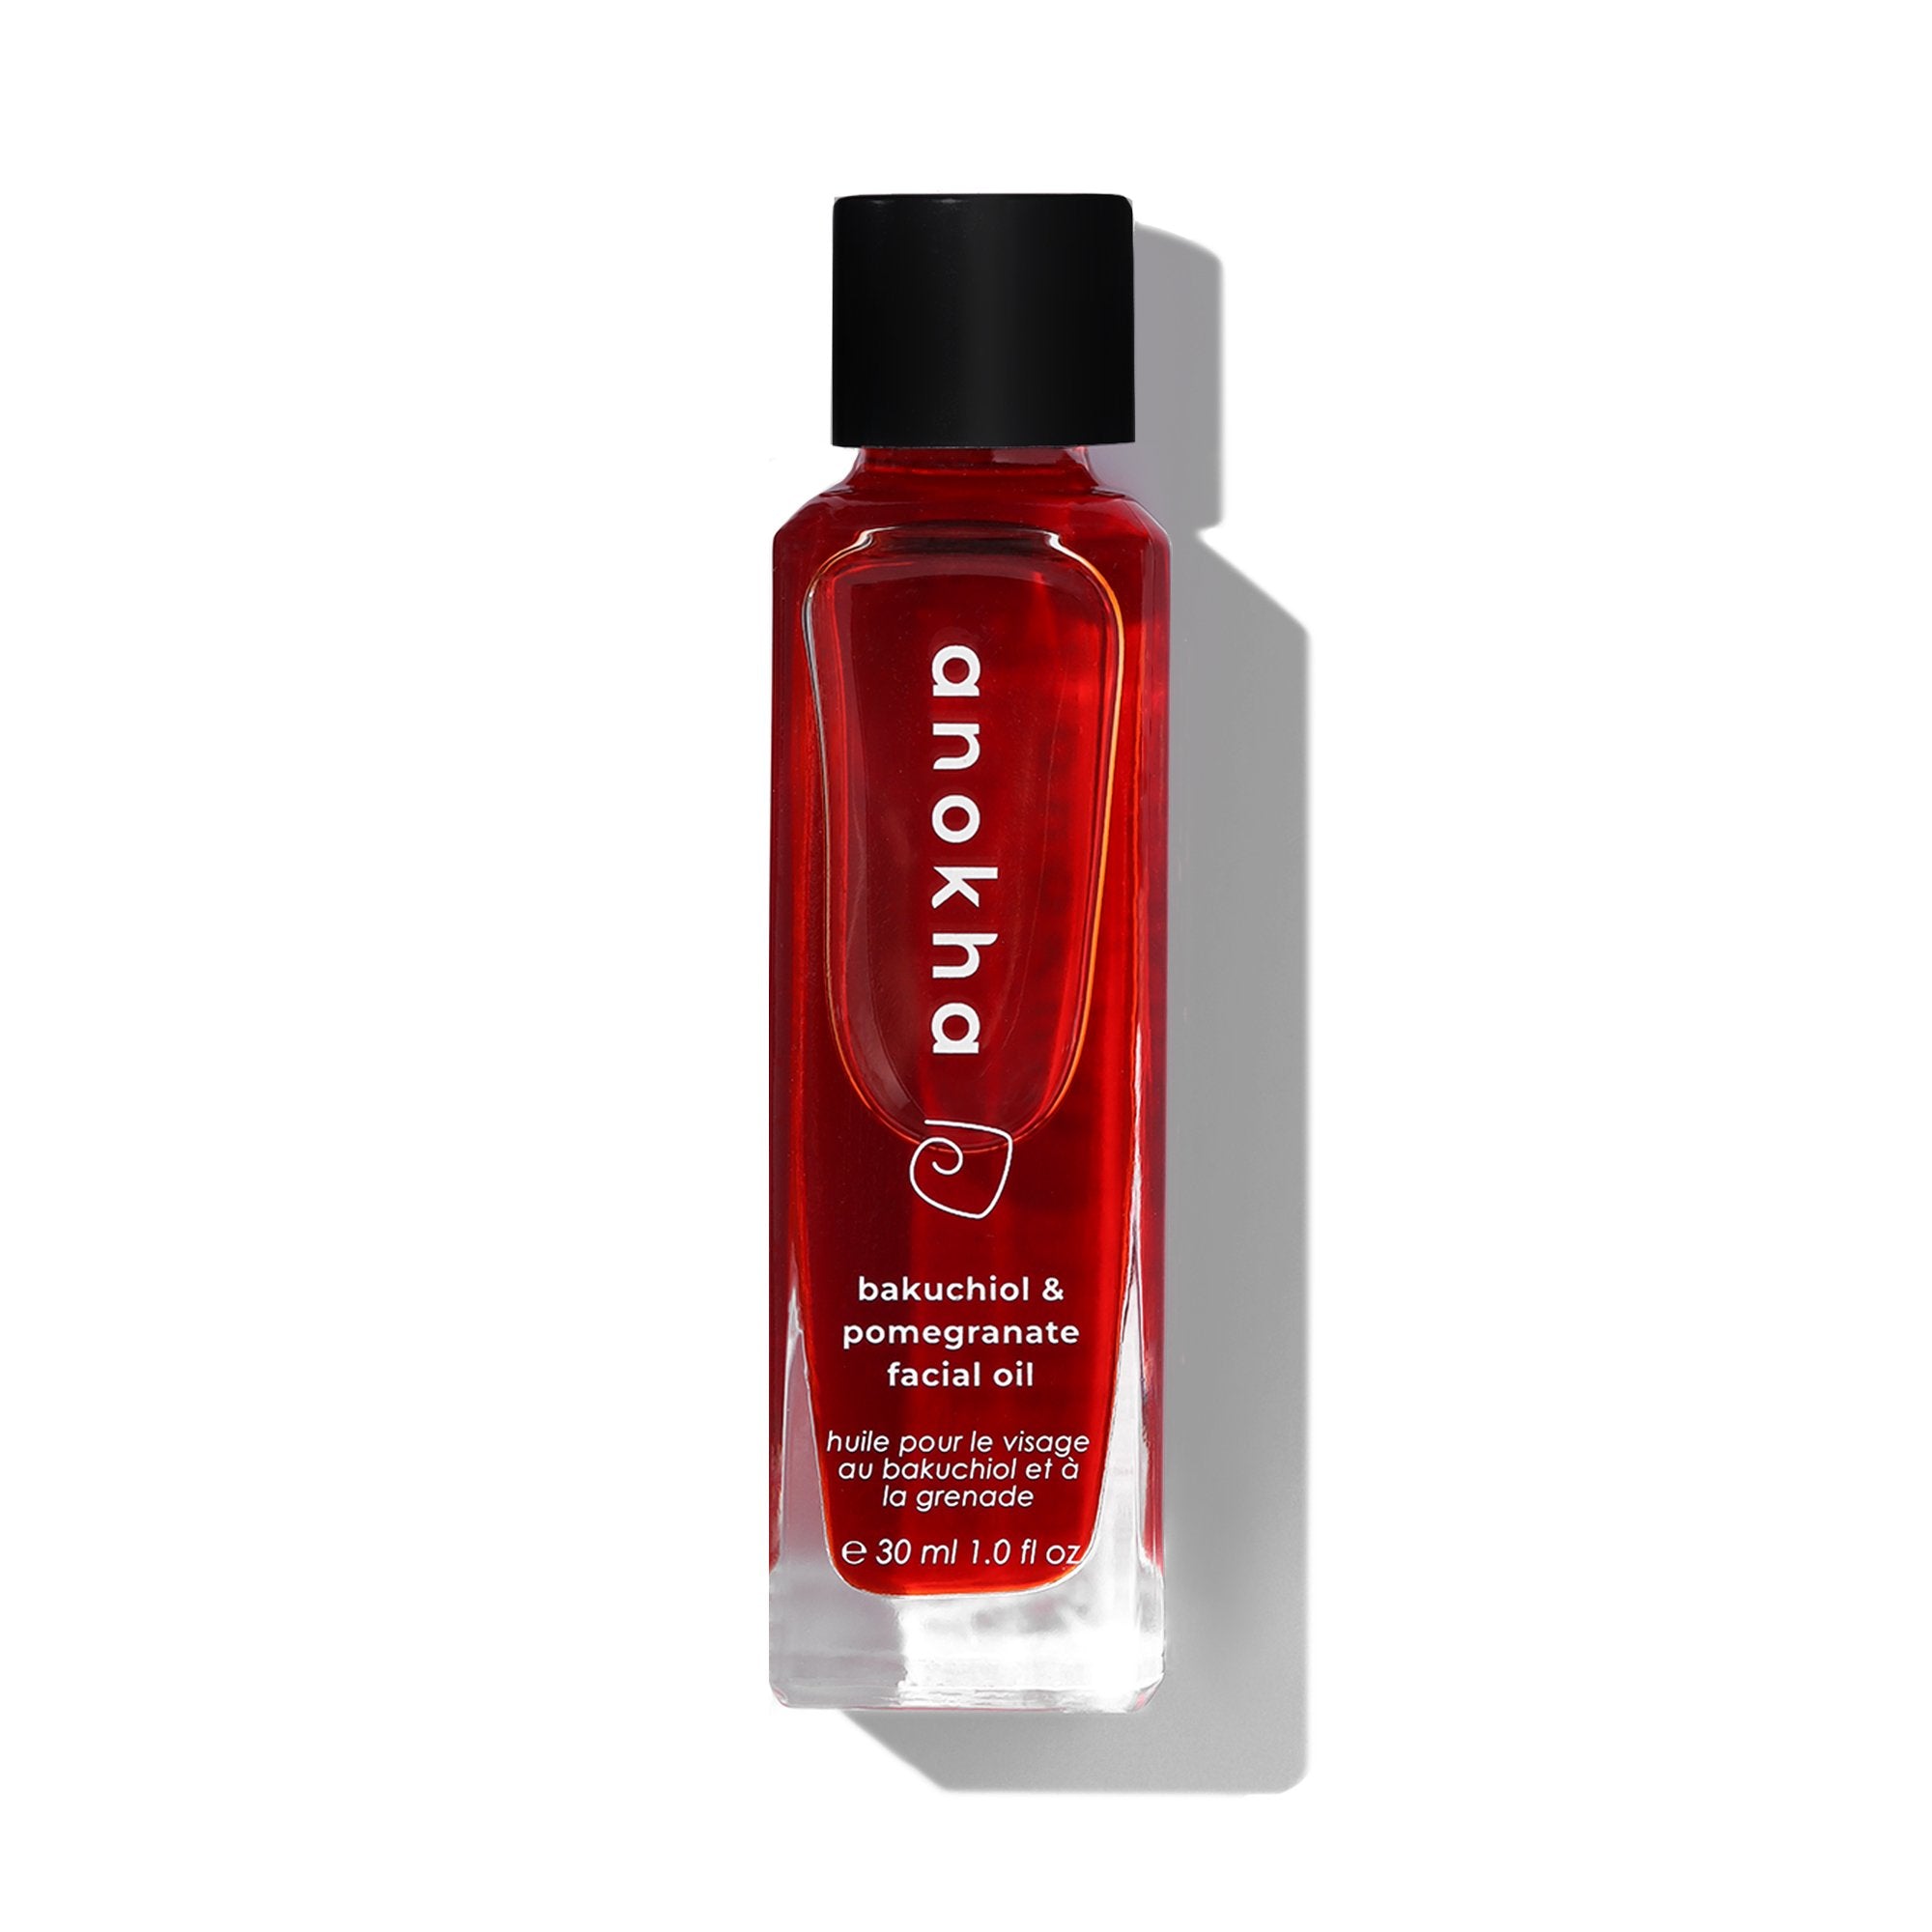 anokha skincare bakuchiol & pomegranate facial oil bottle 30 ml 1 oz on white background